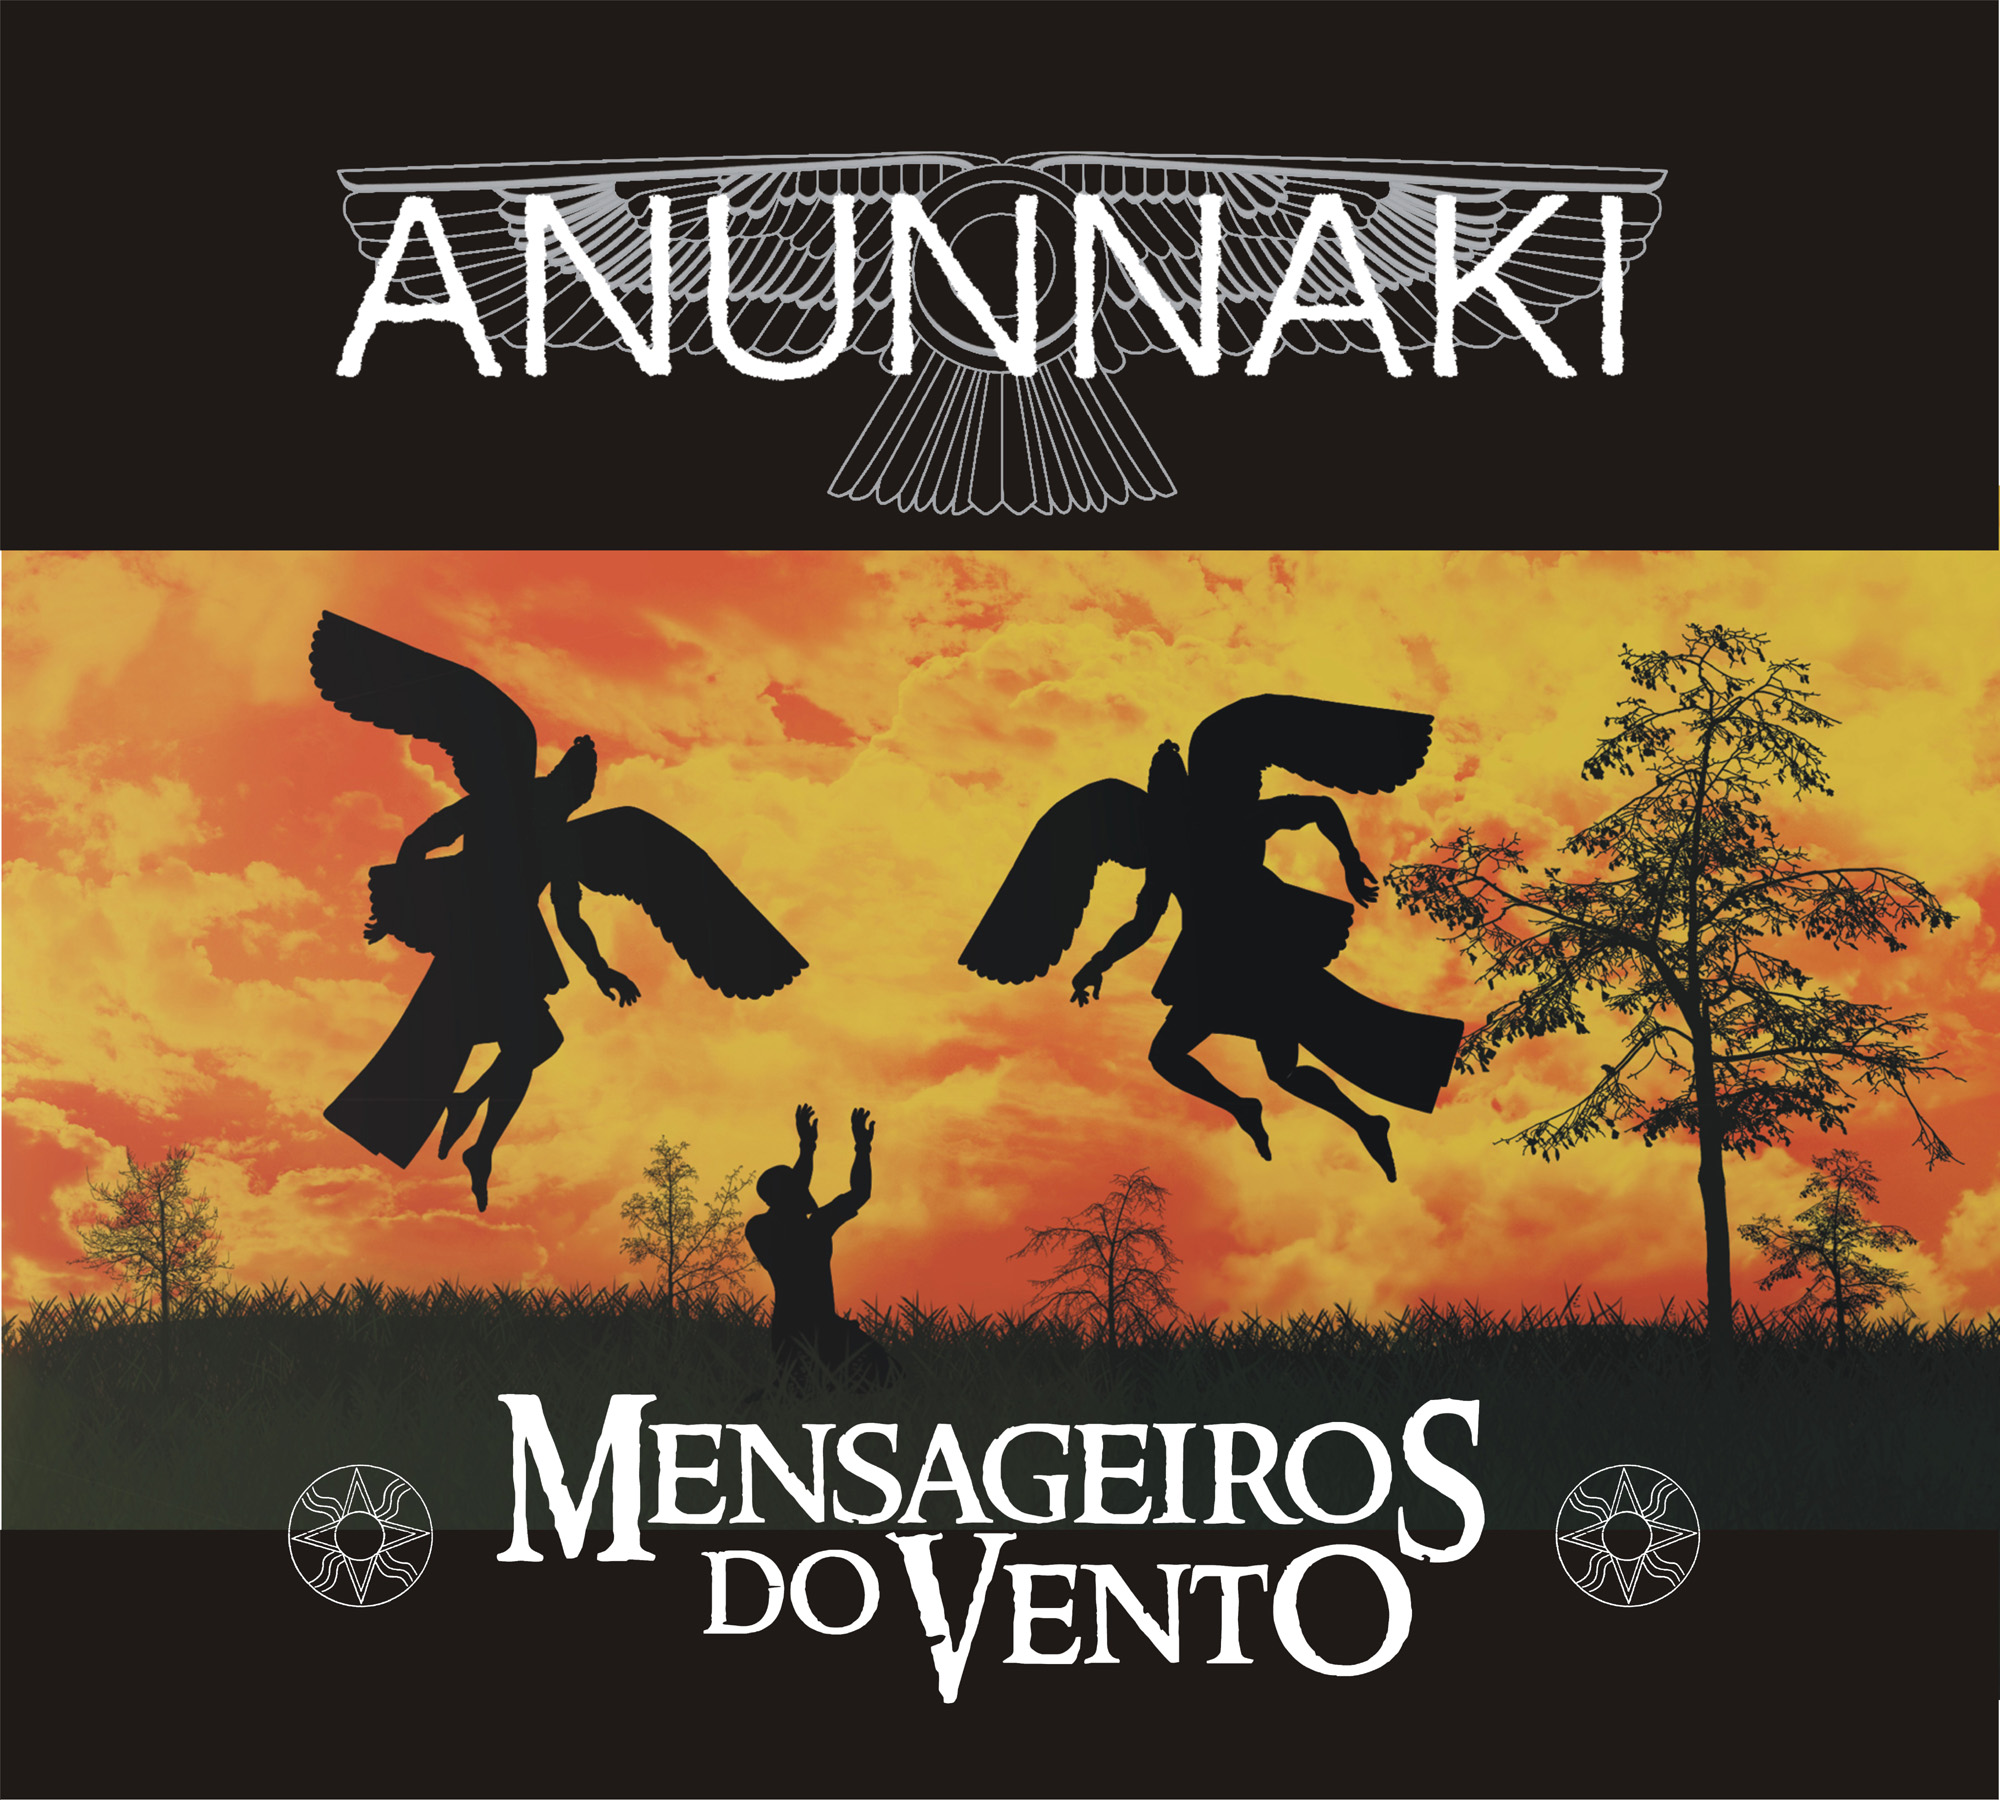 Anunnaki - Mensageiros do Vento